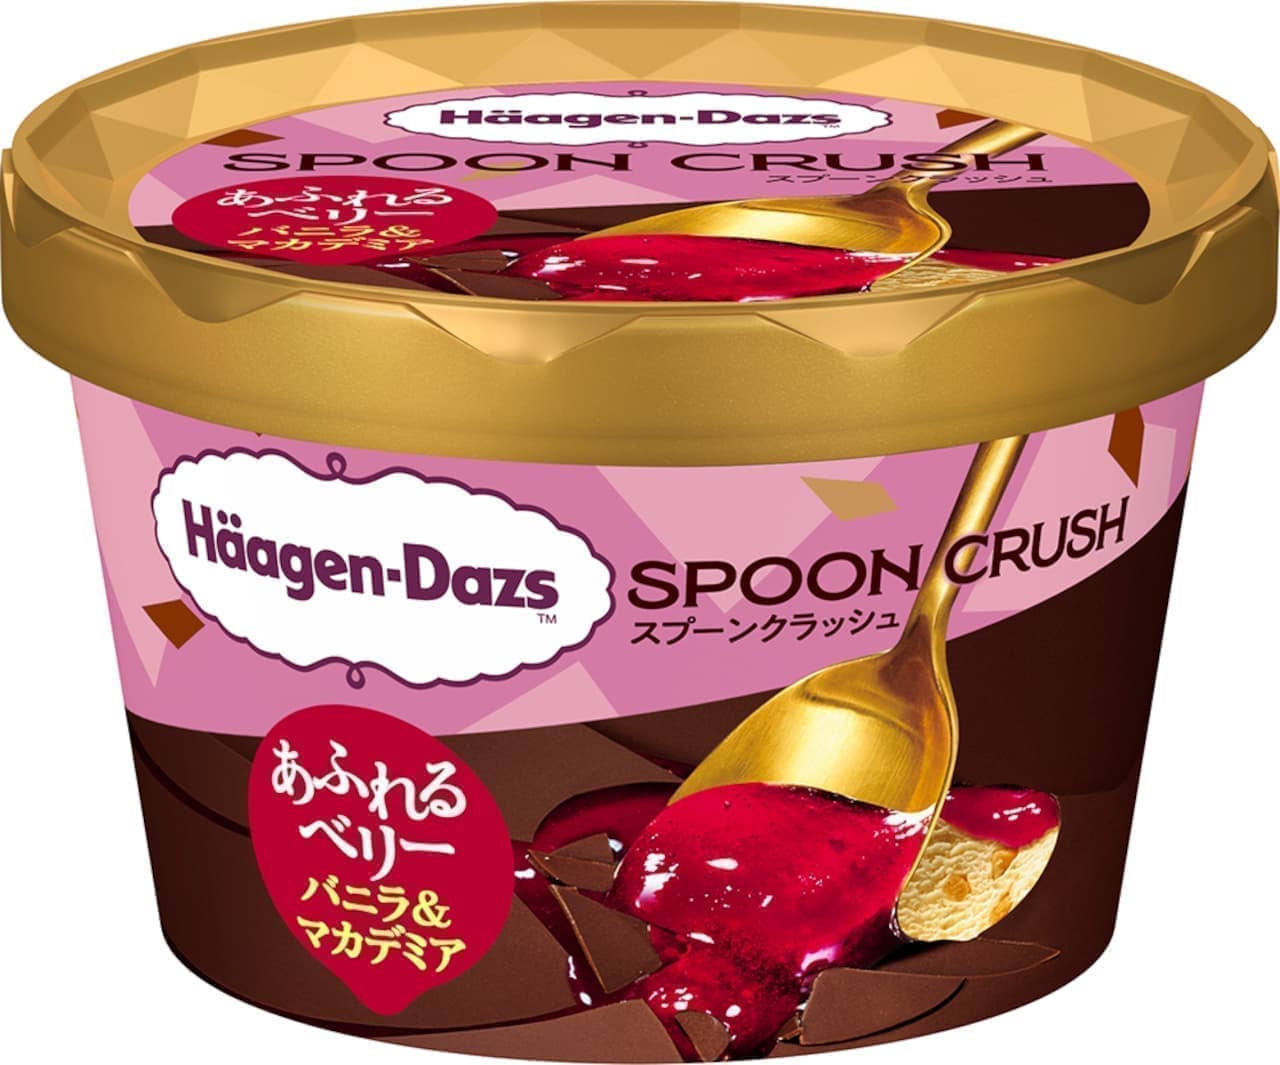 Haagen-Dazs Mini-Cup SPOON CRUSH "Overflowing Berry Vanilla & Macadamia" Package